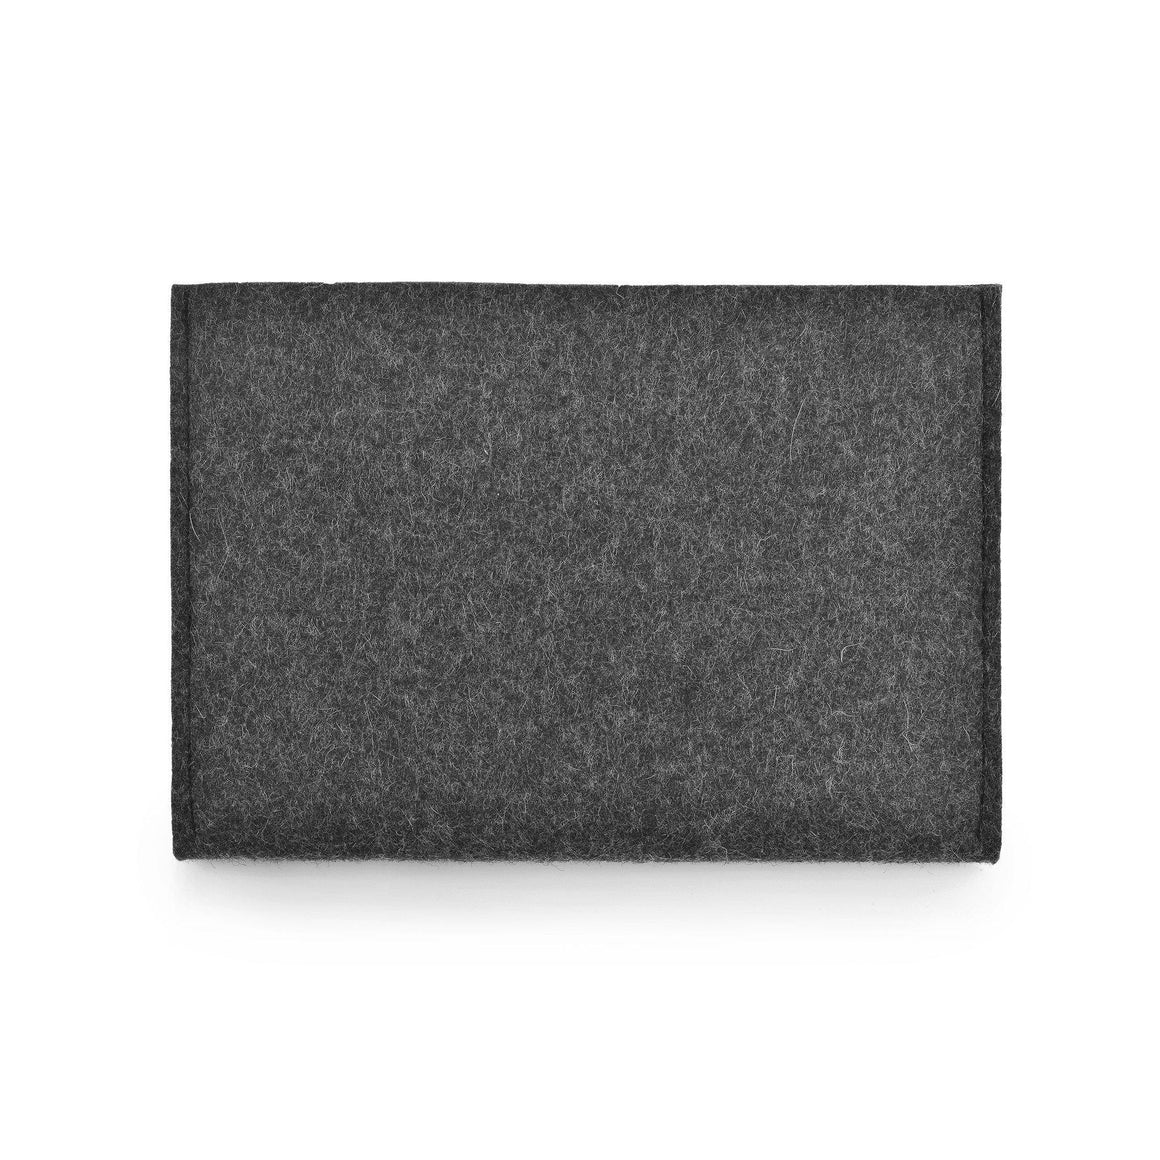 iPad Wool Felt Cover Charcoal Landscape - Wrappers UK